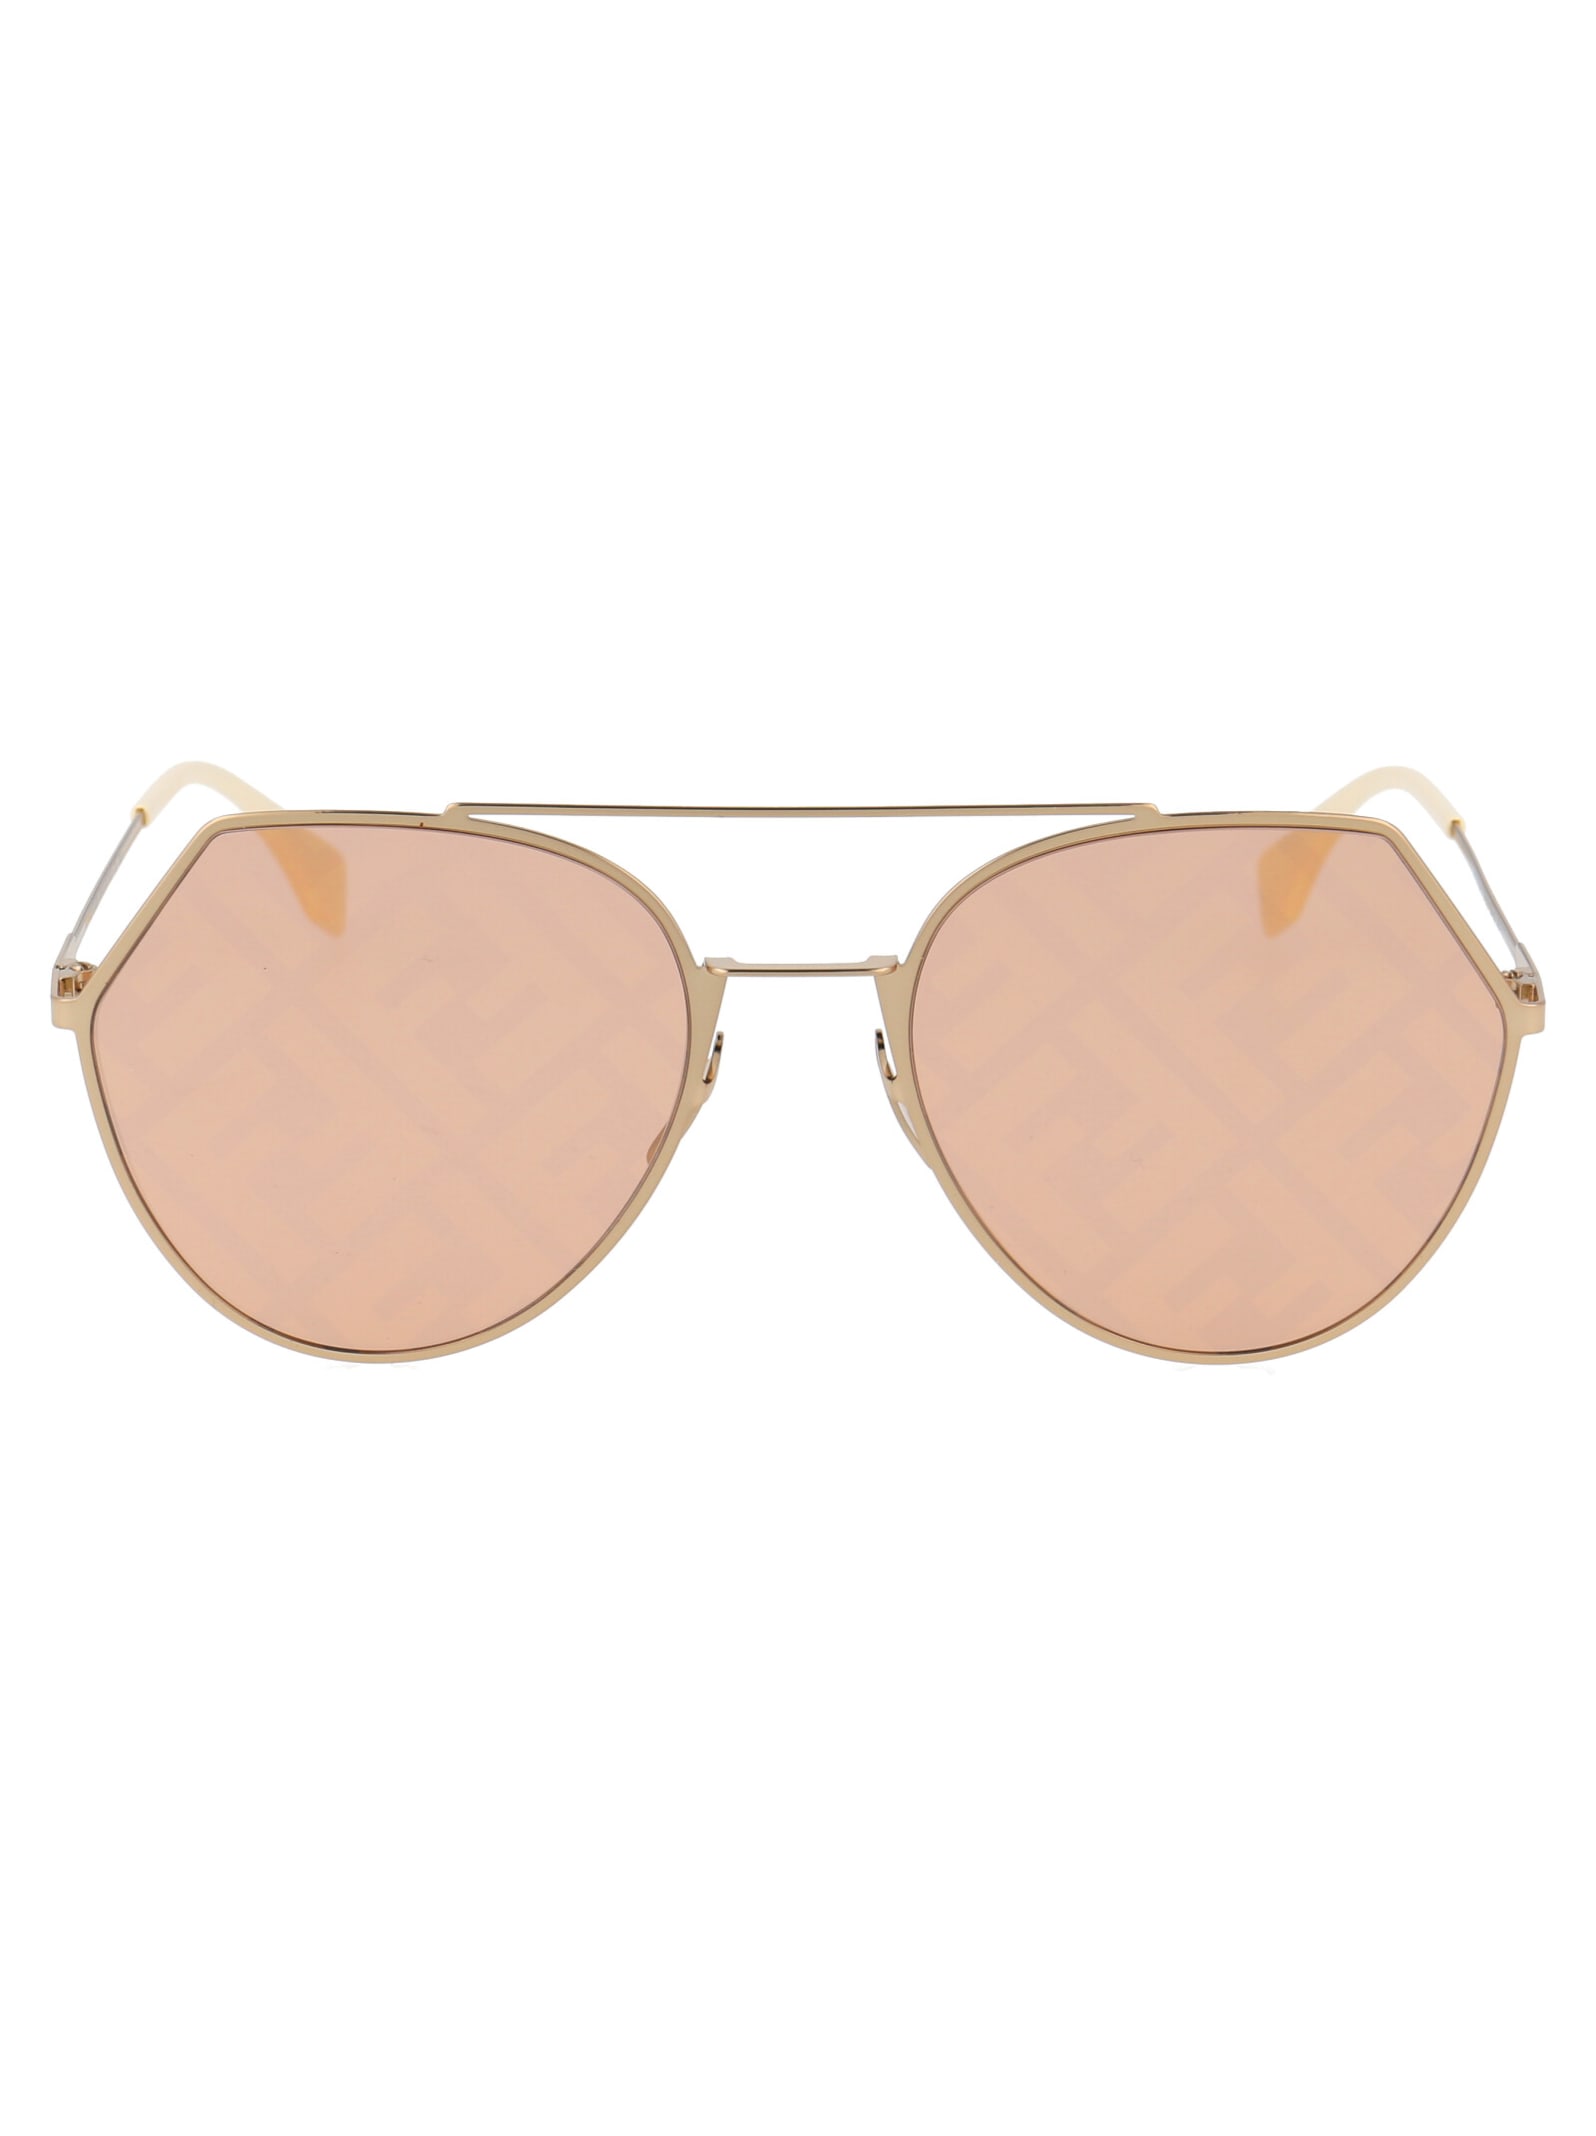 Fendi Ff 0194/s Sunglasses In 84eeb Gd Beige G